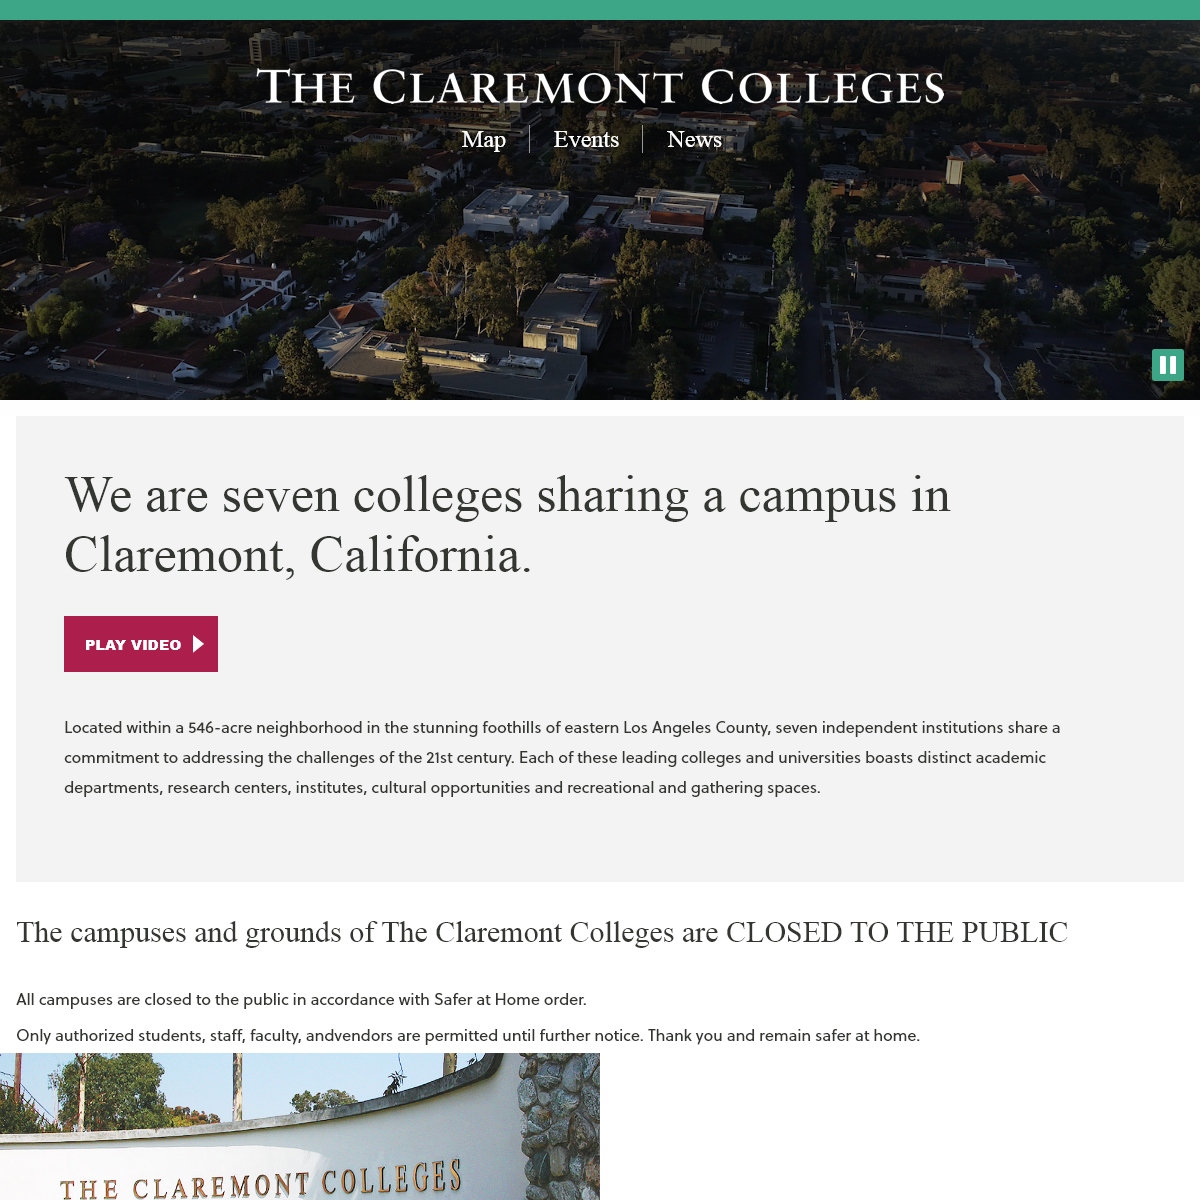 A complete backup of claremont.edu